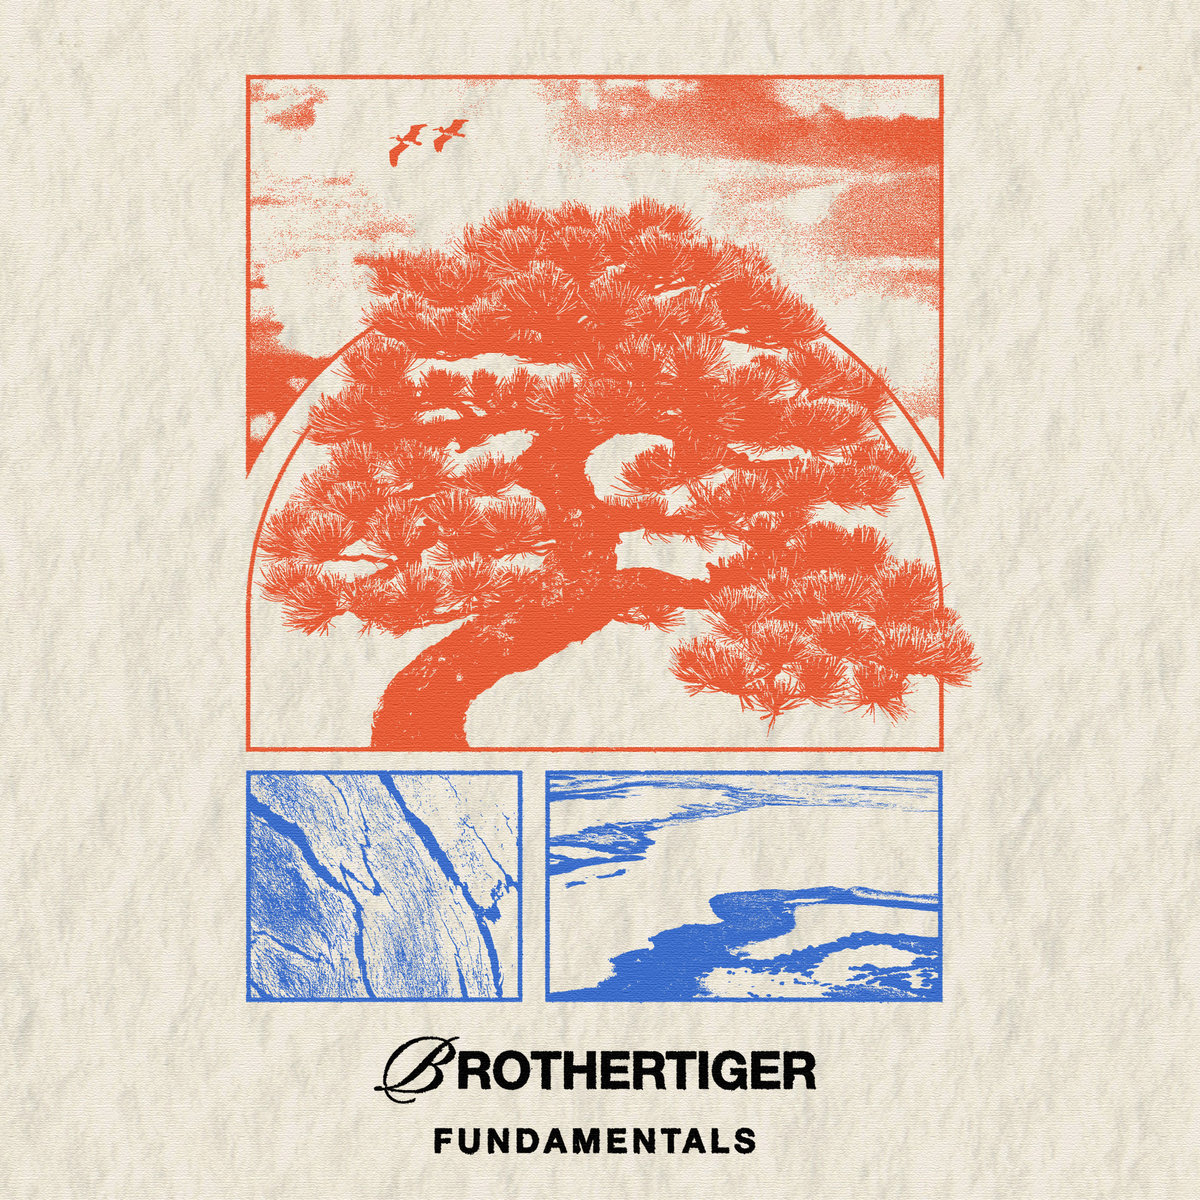 a2821107173 10 - Brothertiger releases 'Fundamentals' Anthology